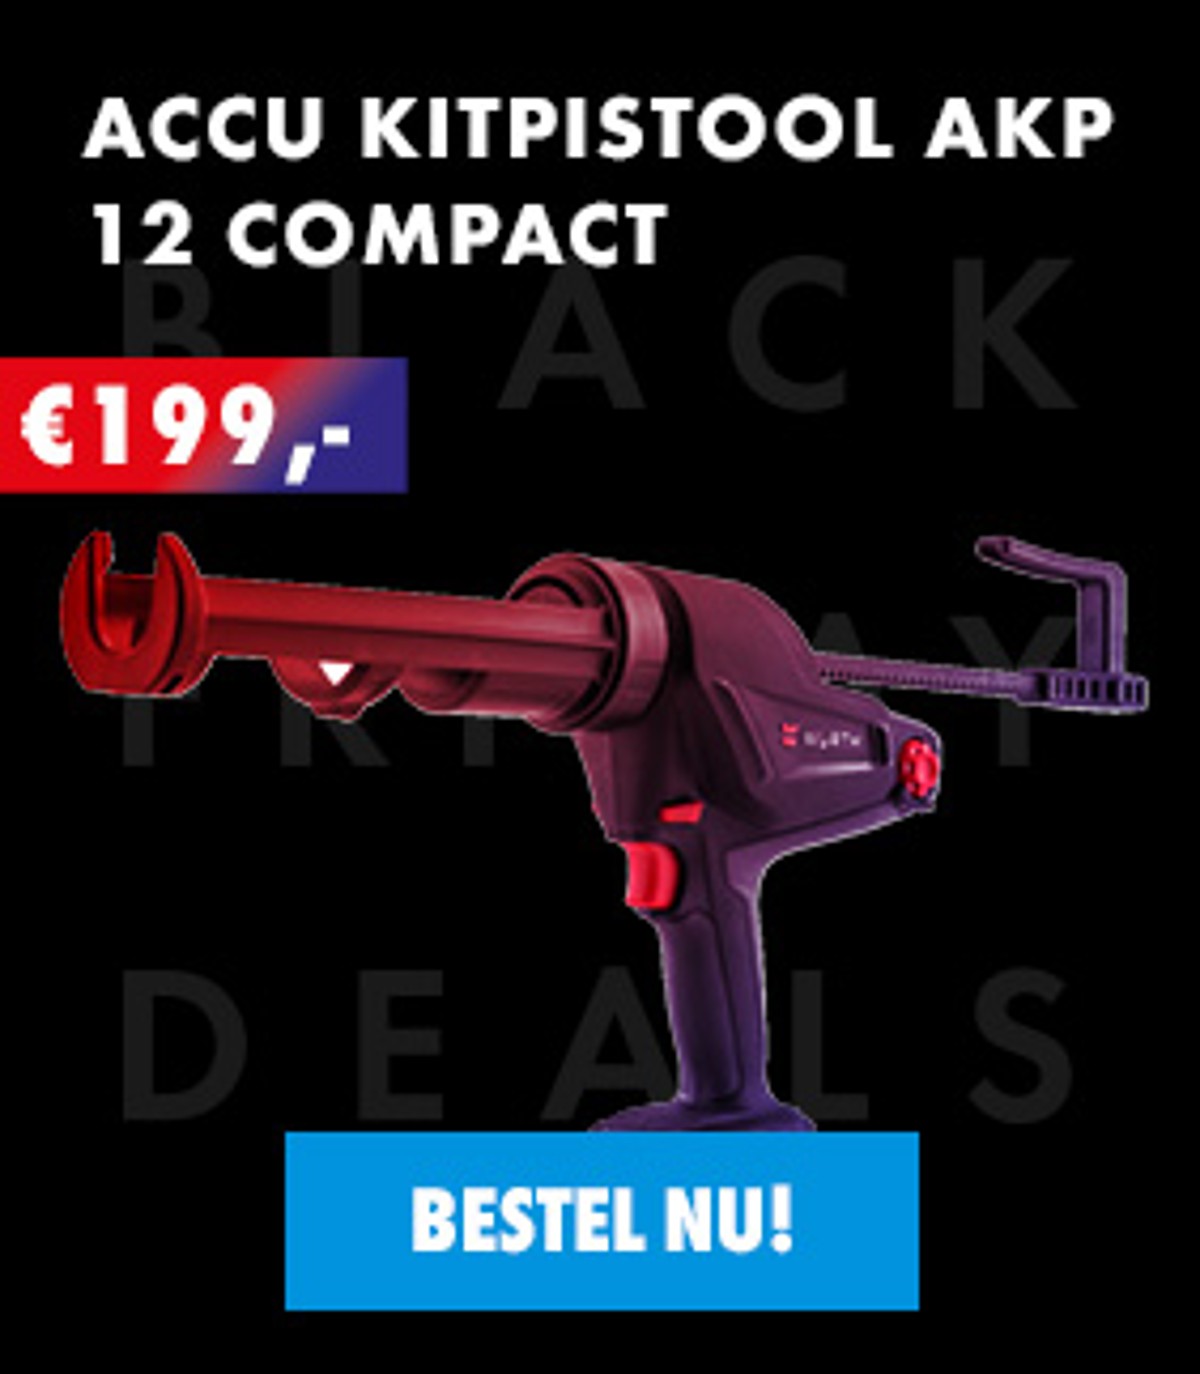 Accu kitpistool AKP 12 COMPACT - incl. 2X3,0Ah